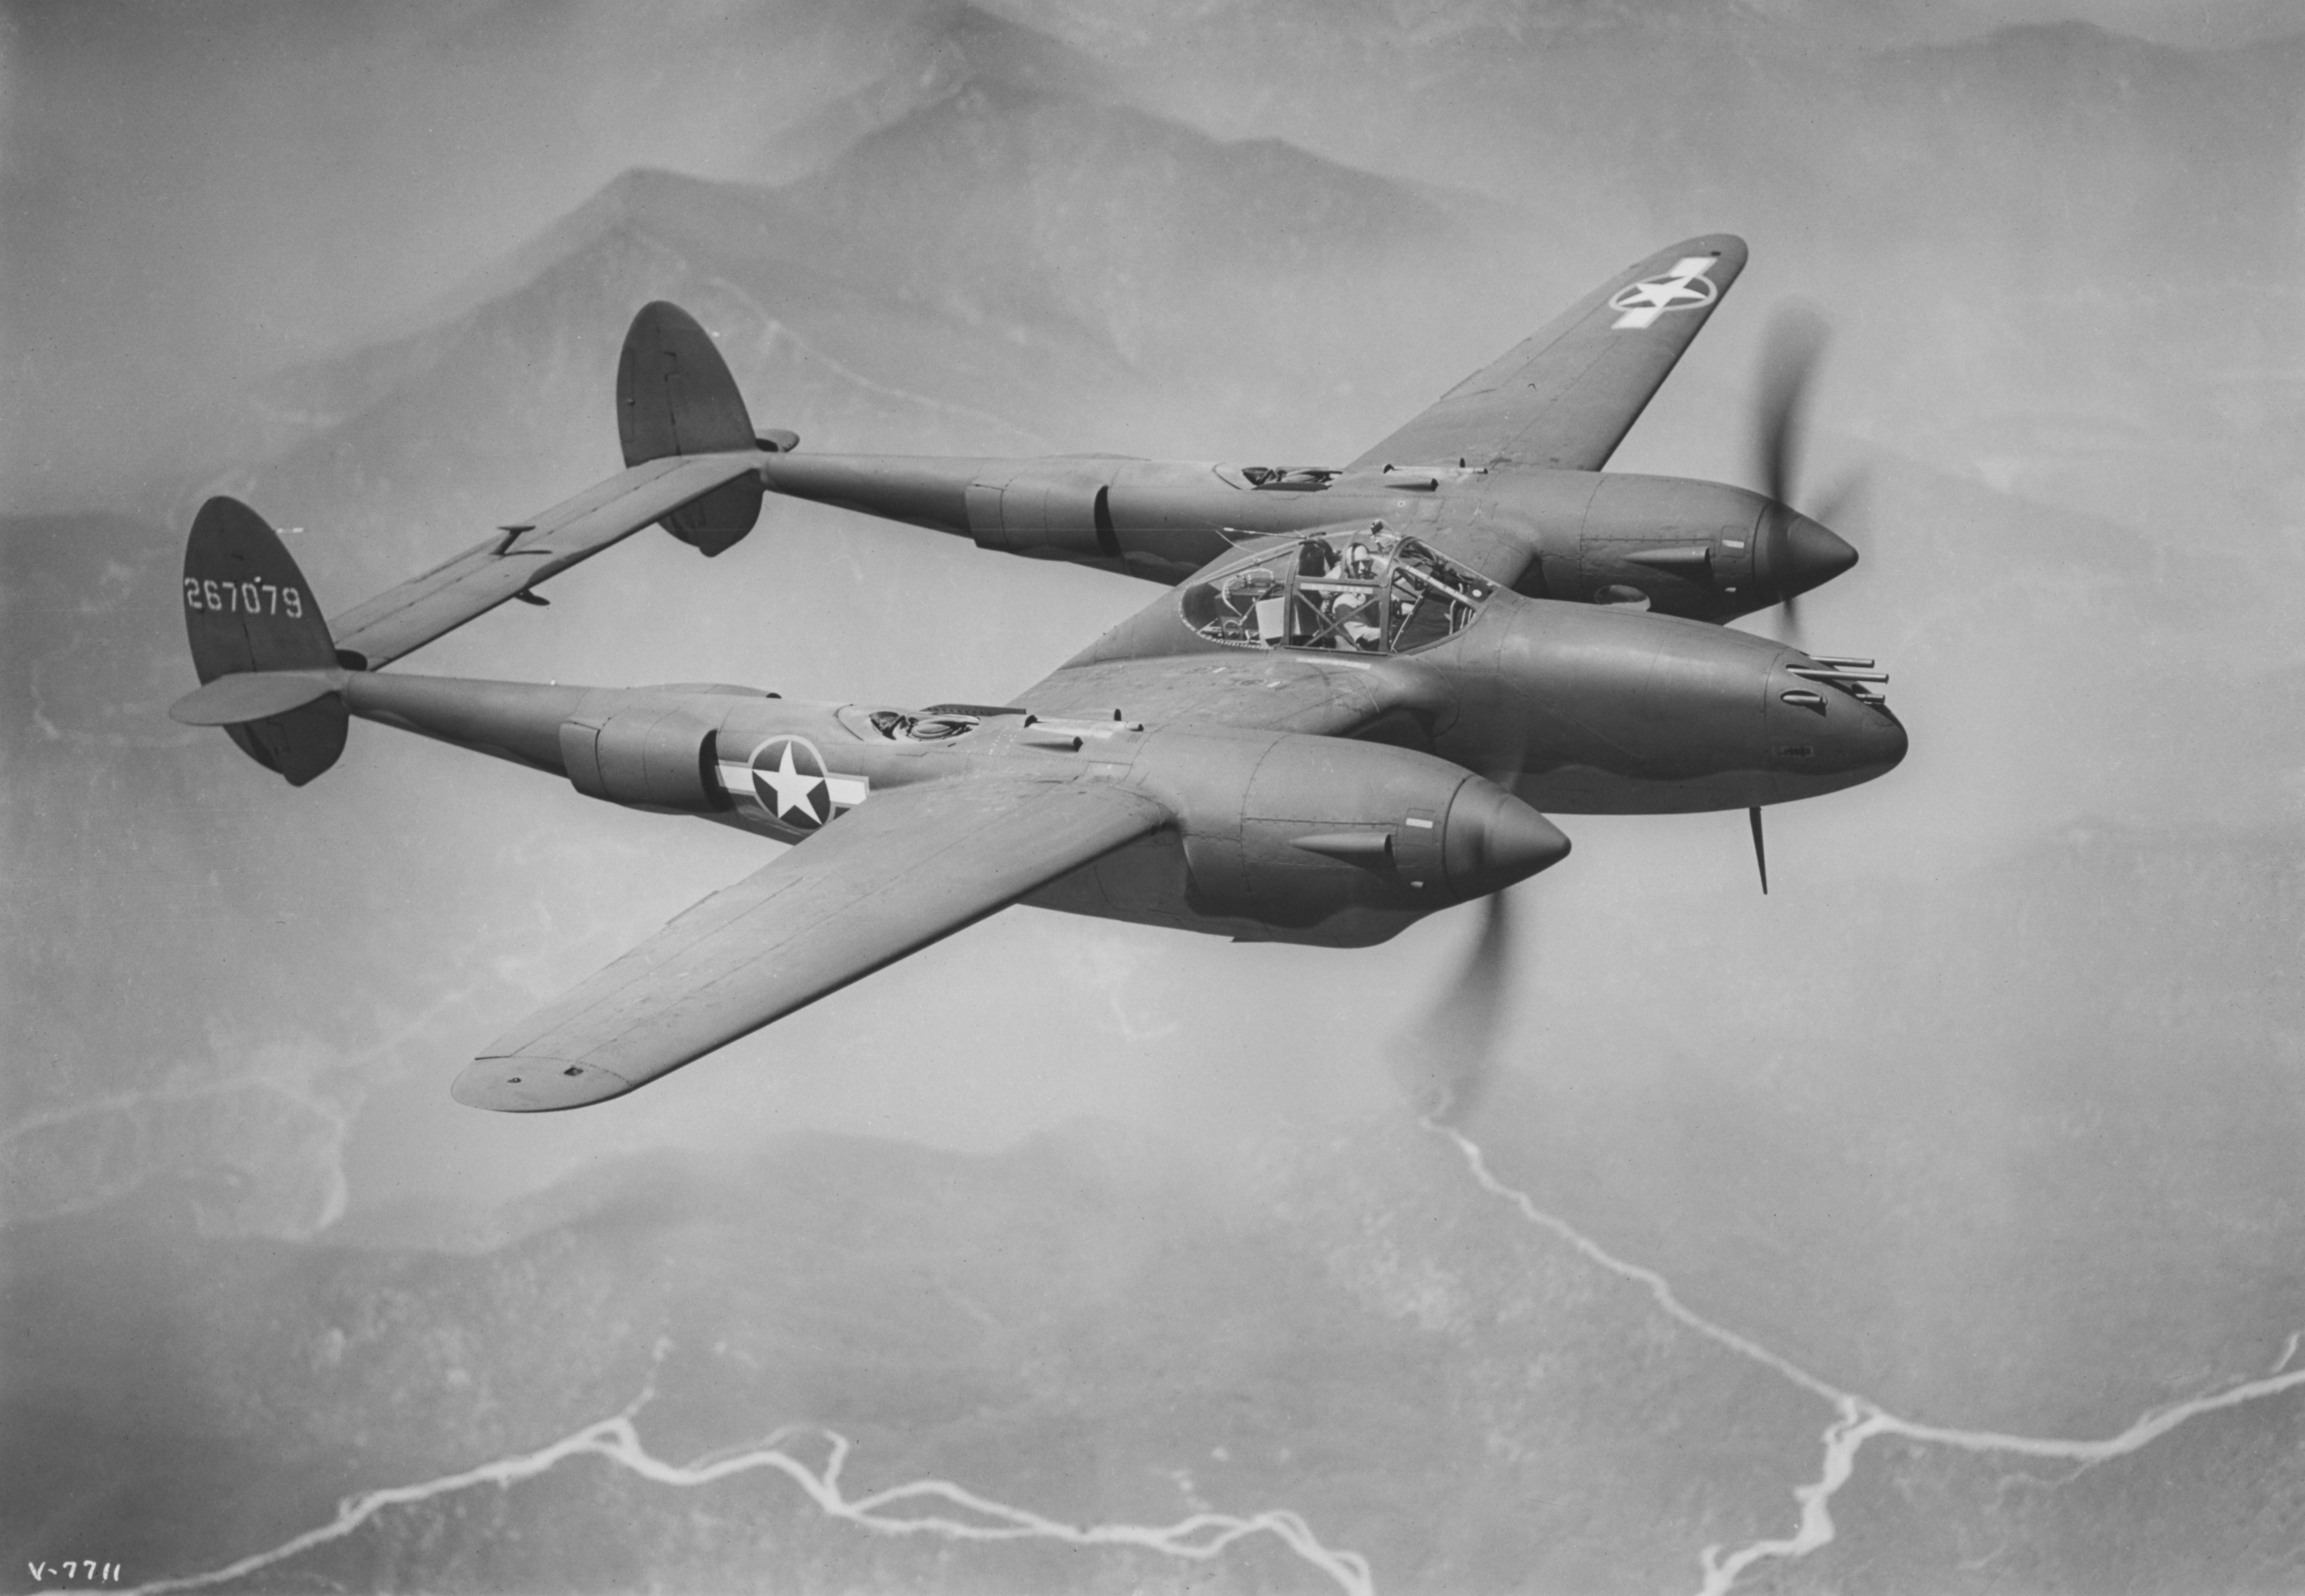 LOCKHEED P-38 LIGHTNING AIRCRAFT WWII 8x12 SILVER HALIDE PHOTO PRINT 